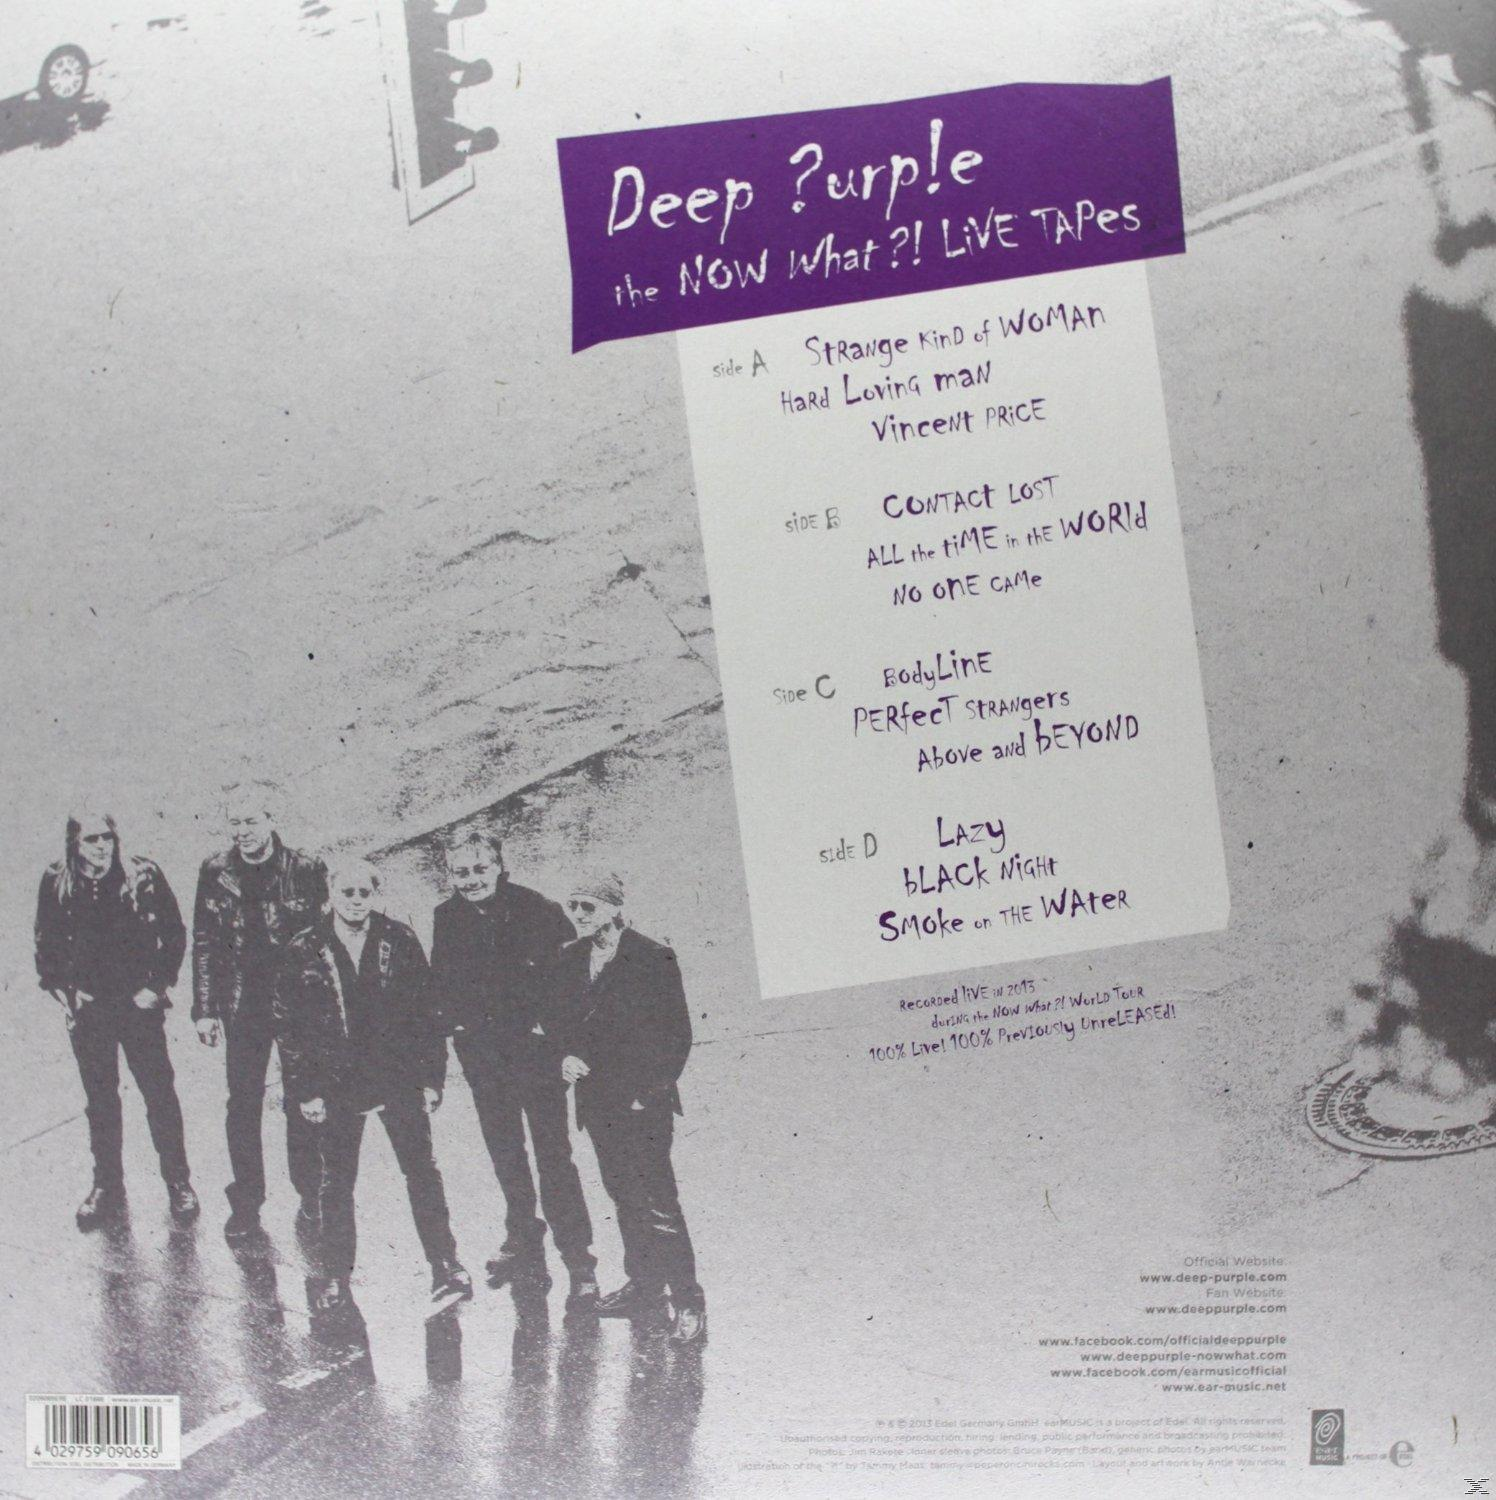 NOW (GOLD (Vinyl) Deep Purple - - WHAT?! EDITION)